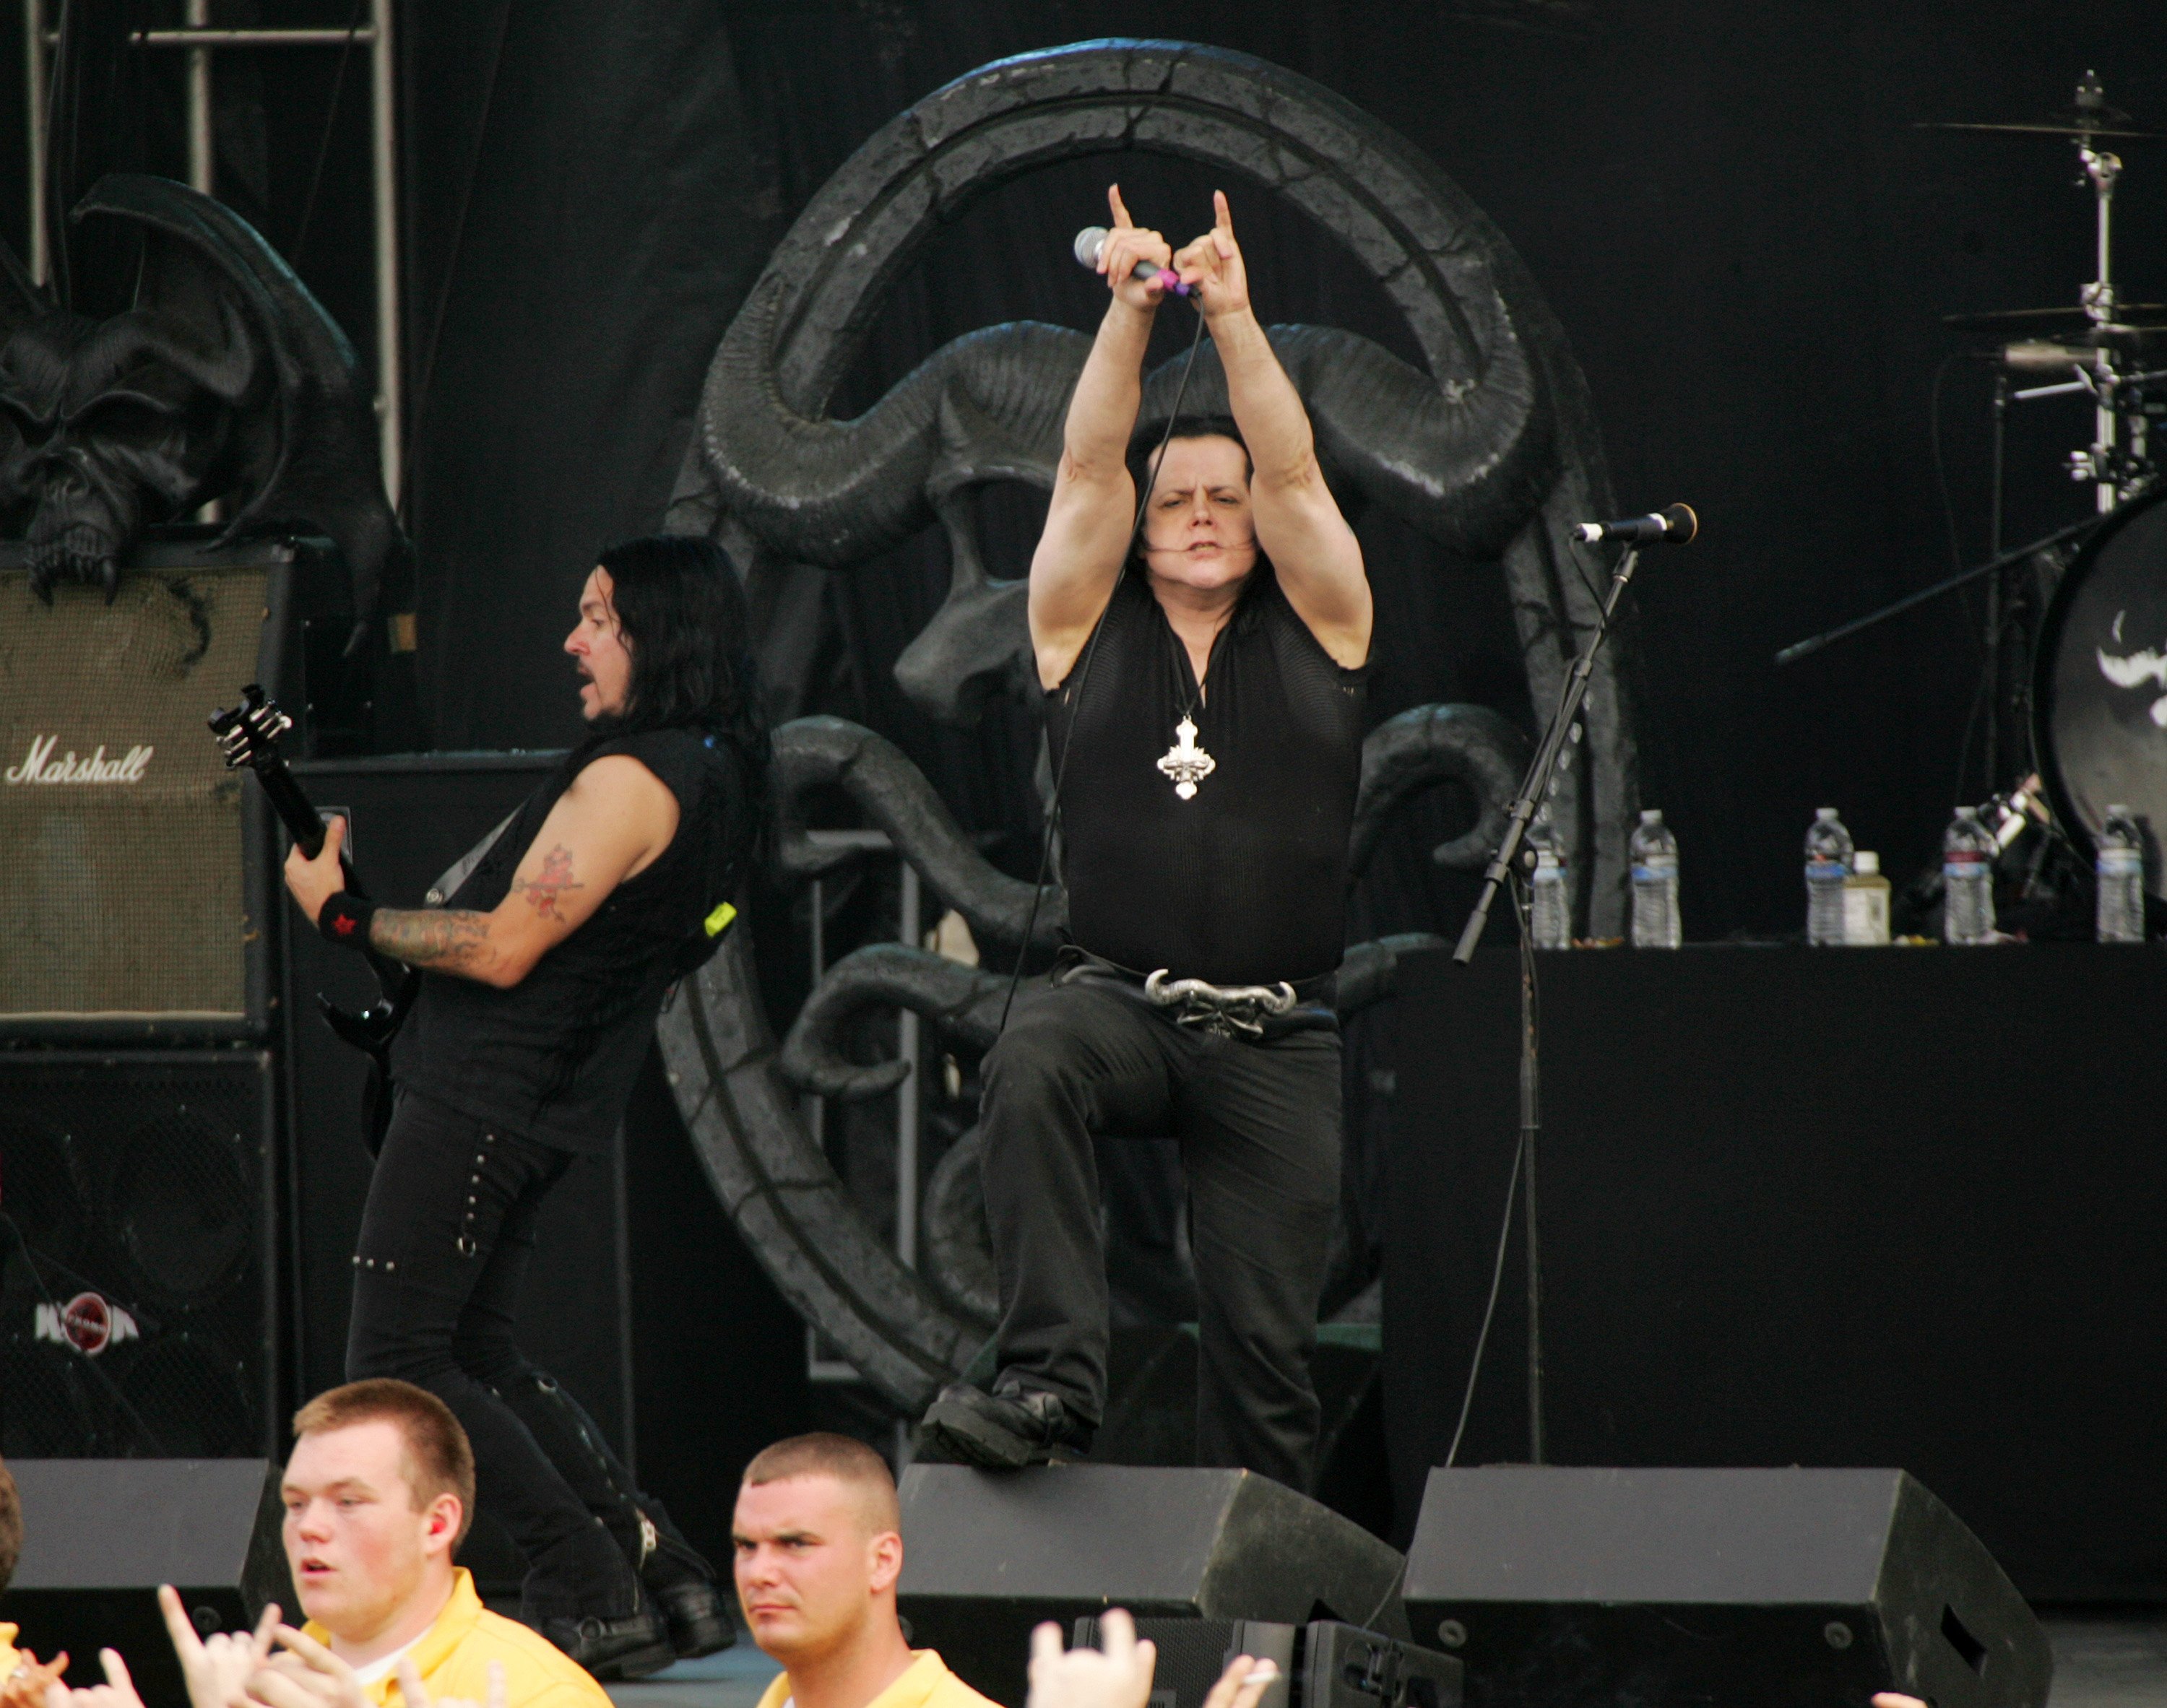 Glenn Danzig raising his arms